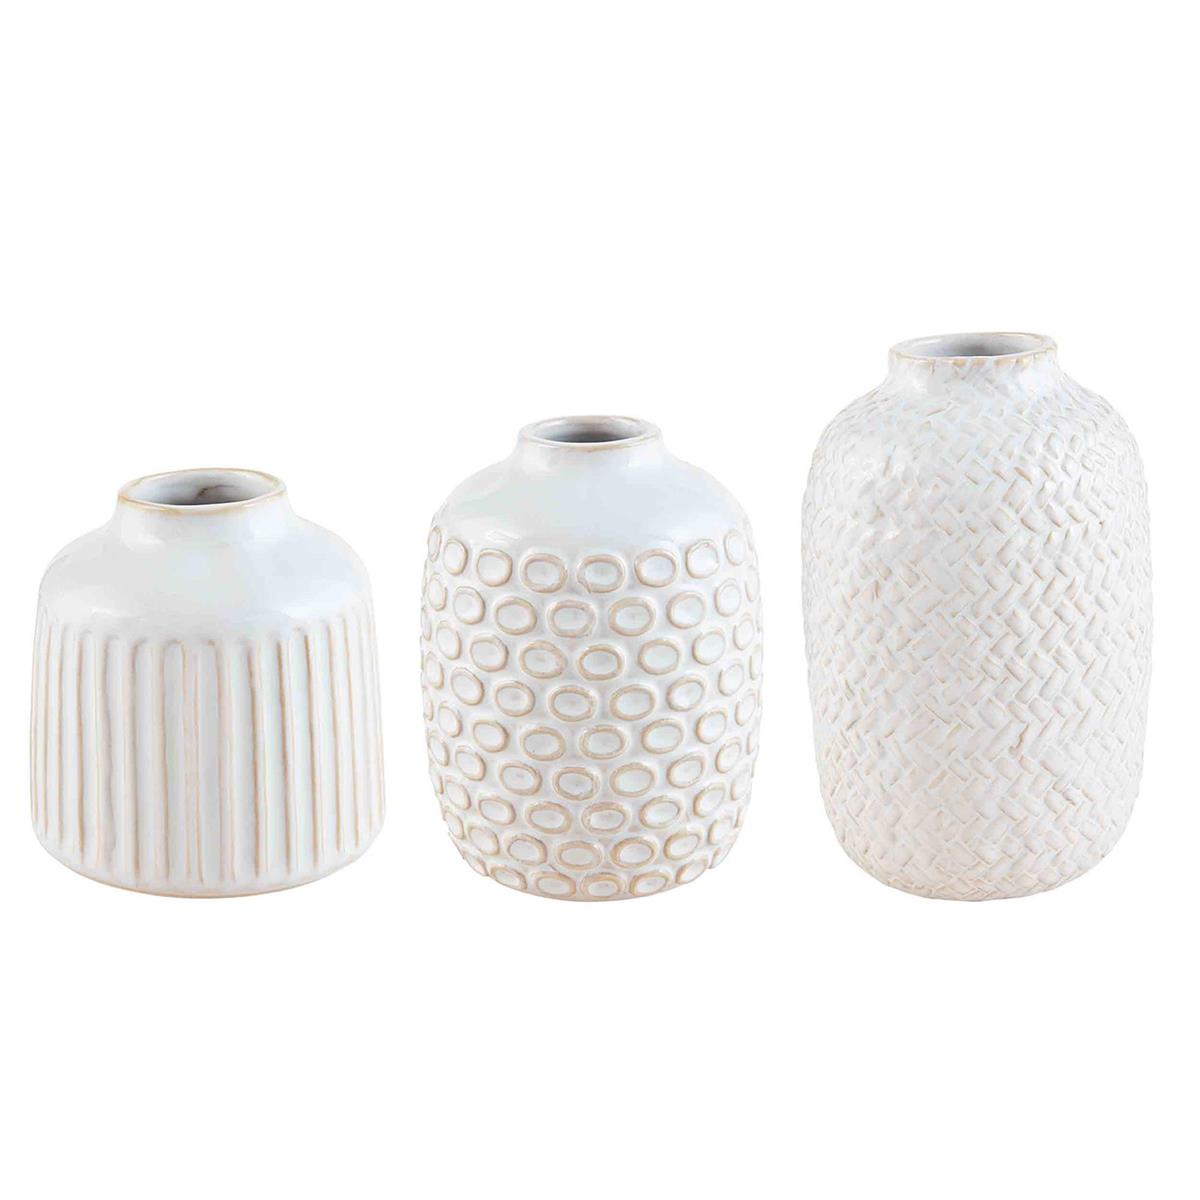 3 sizes of assorted vases on white background.